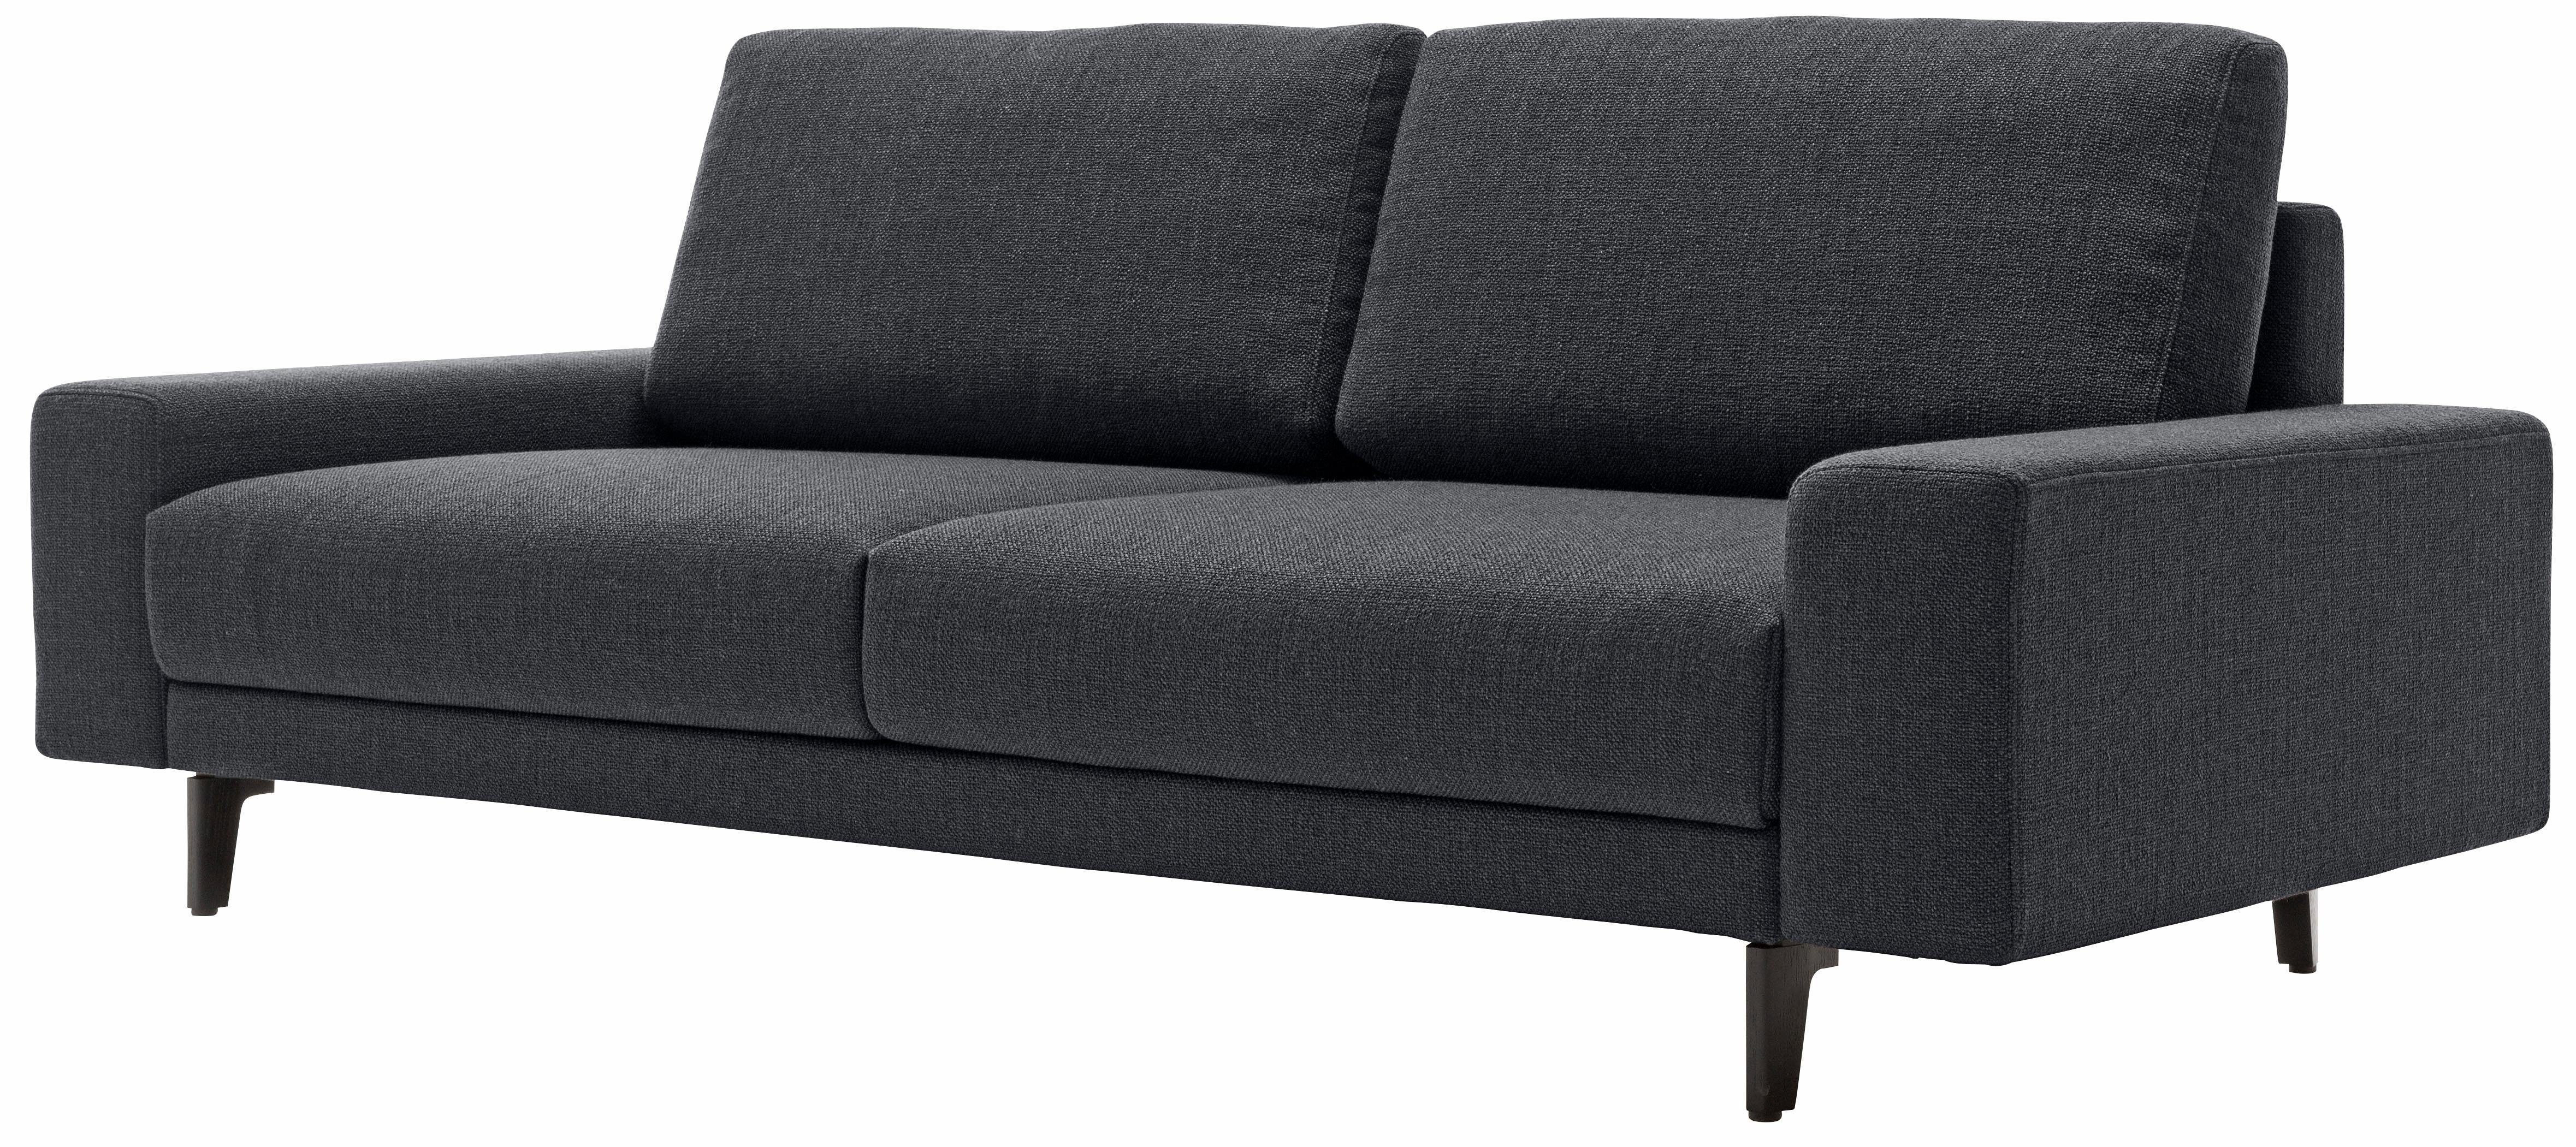 hülsta cm Alugussfüße Breite umbragrau, Armlehne niedrig, 2-Sitzer 180 in hs.450, breit sofa